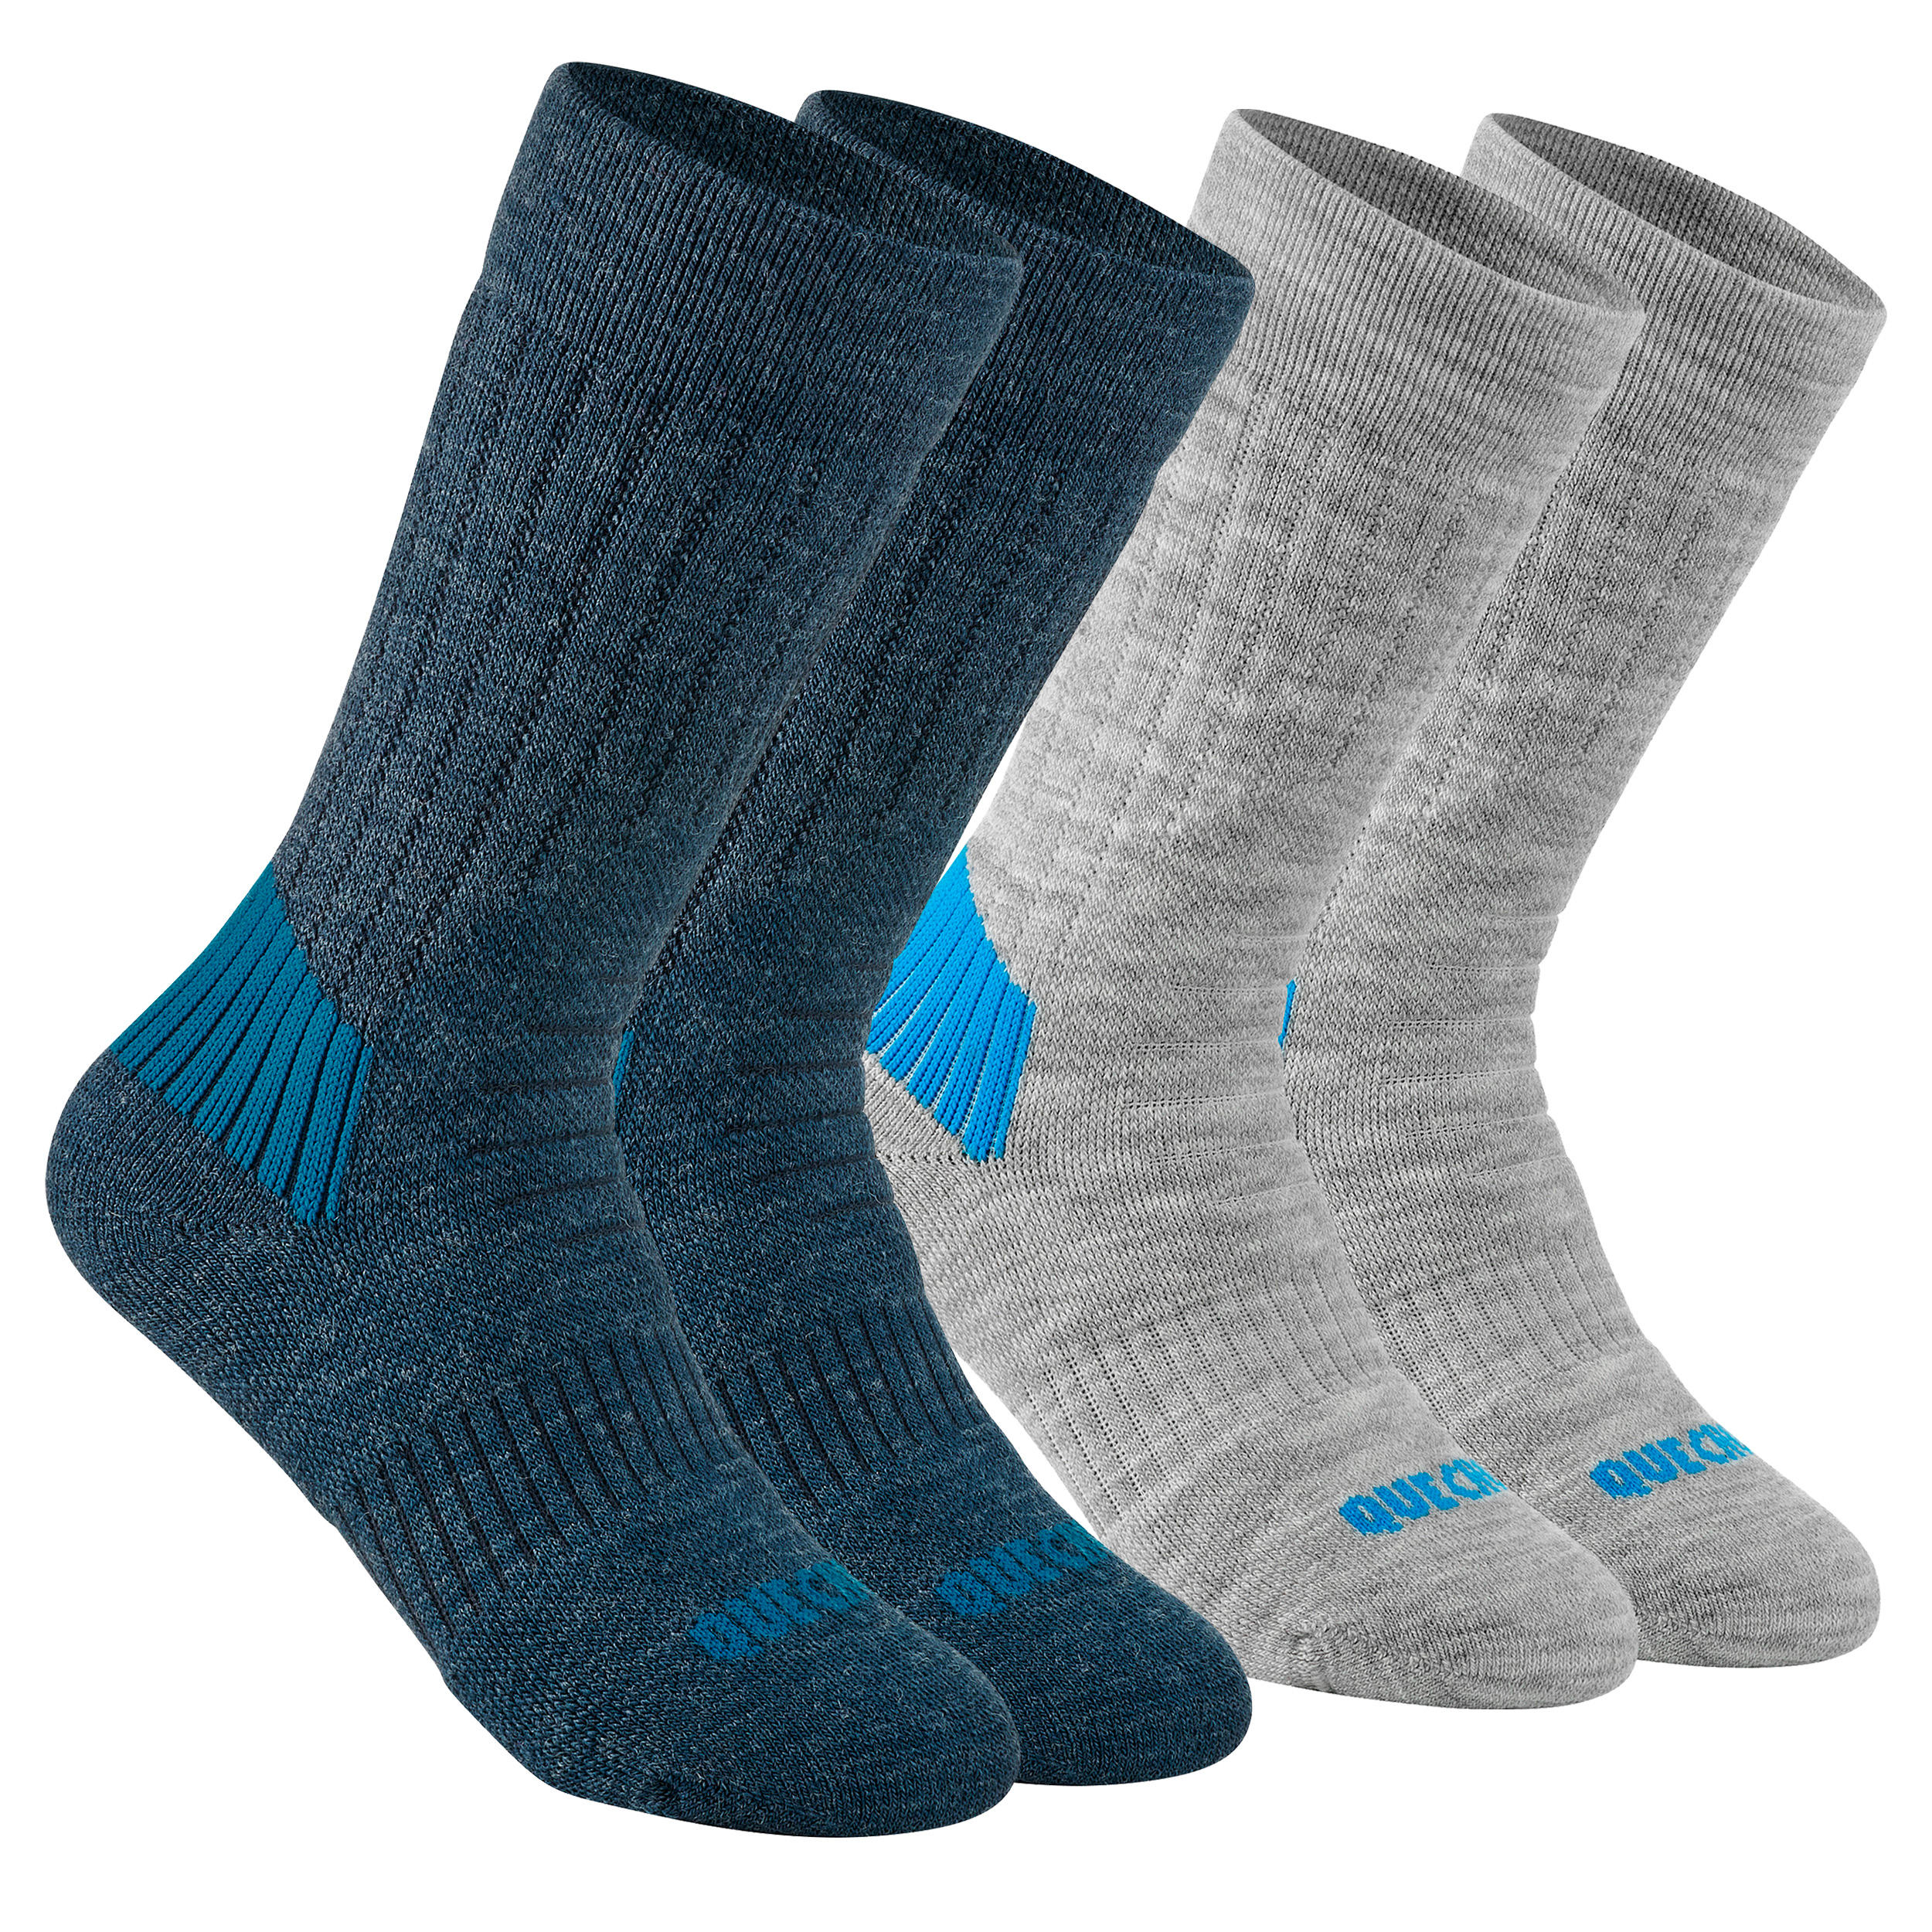 QUECHUA Child's Warm Walking Socks - 2 Pack - Blue/Grey